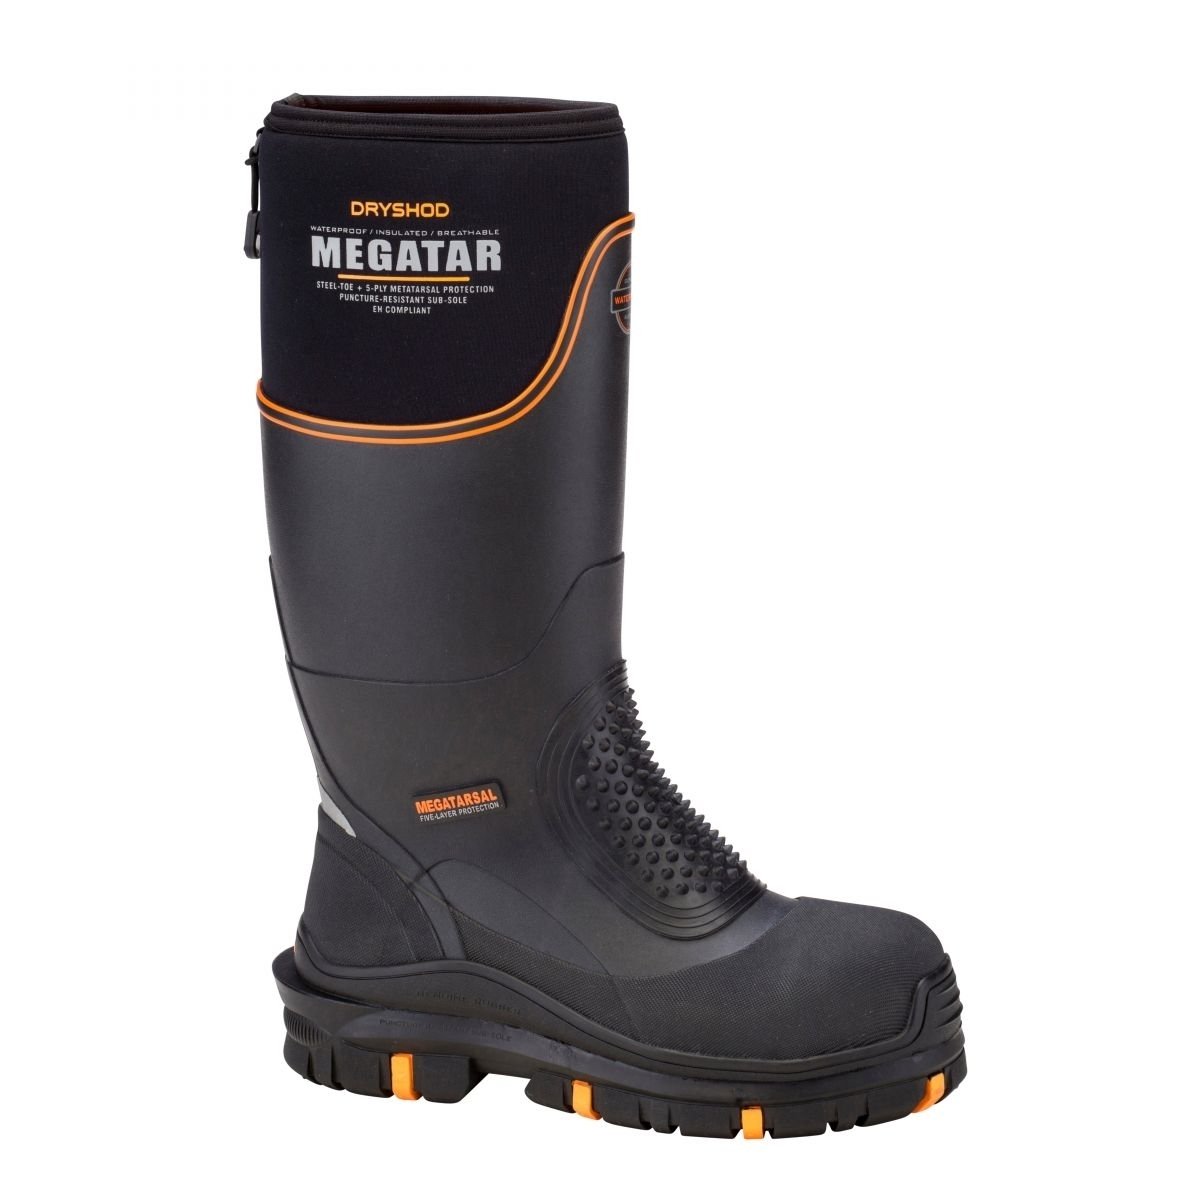 Dryshod Men's Megatar Steel Toe Metatarsal Guard Work Boot Black - MEG-MH-BK ONE SIZE BLACK/ORANGE - BLACK/ORANGE, 11